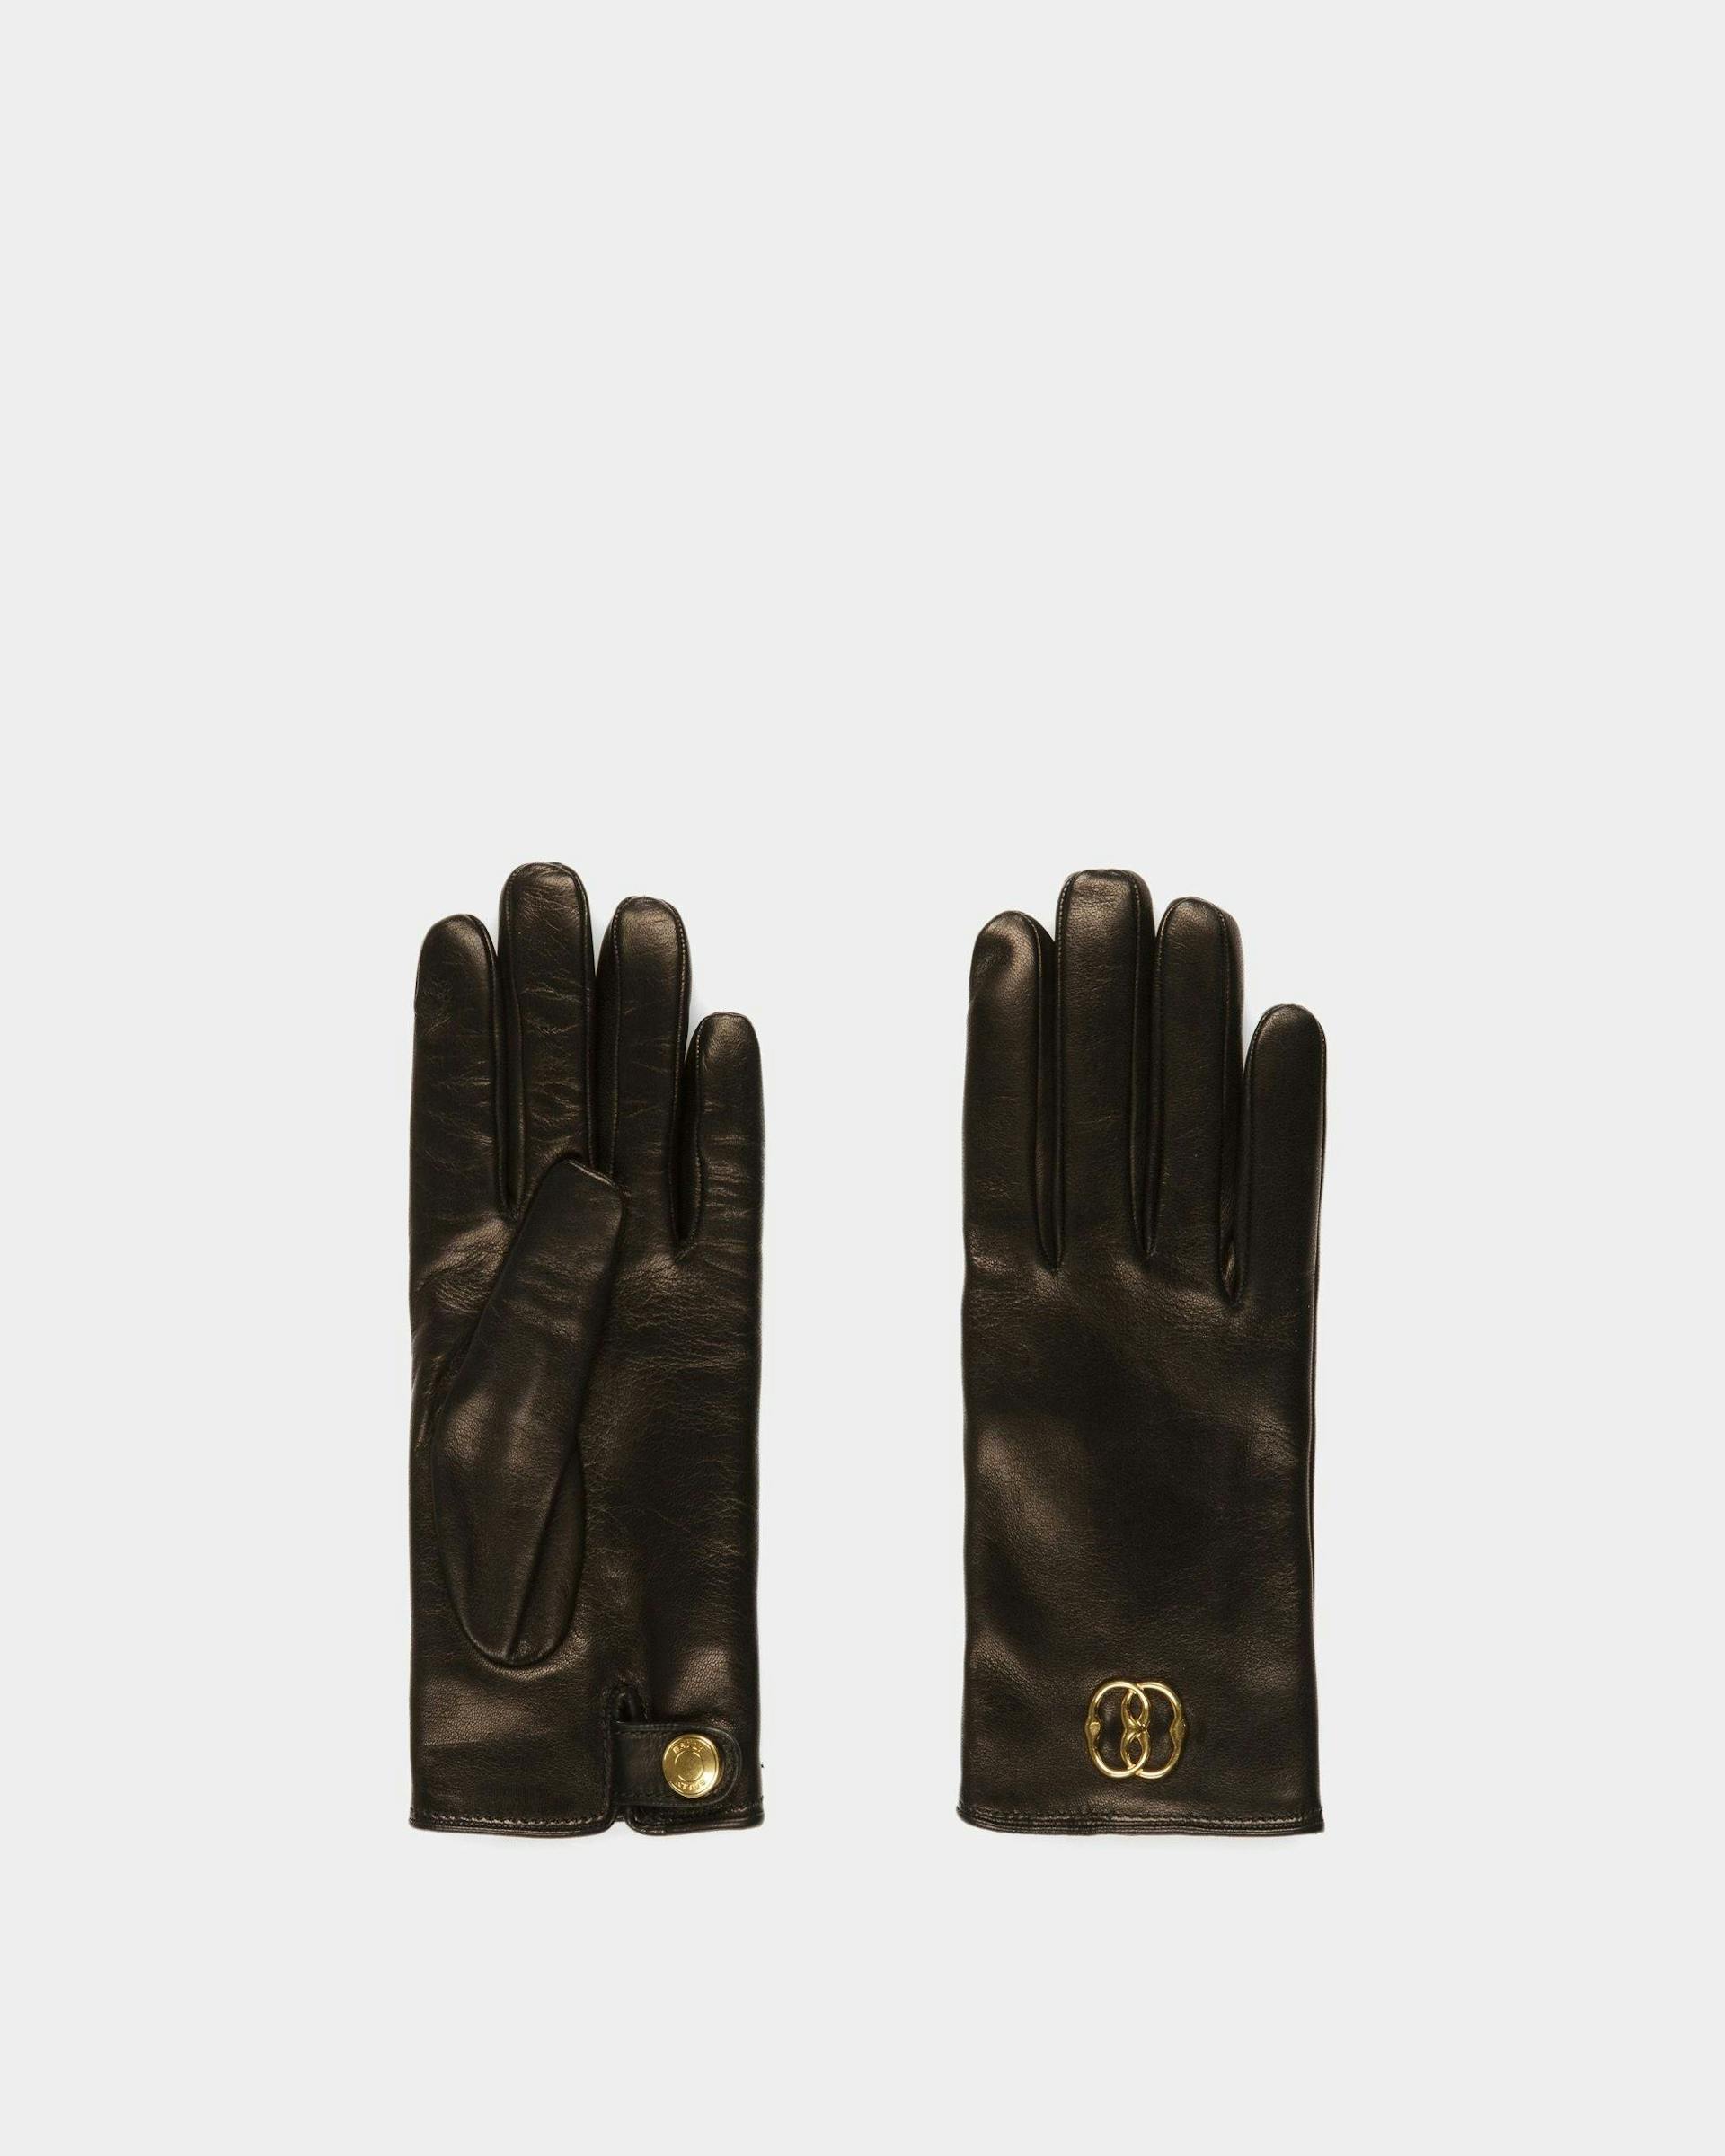 Emblem Gloves In Black Leather - Women's - Bally - 01